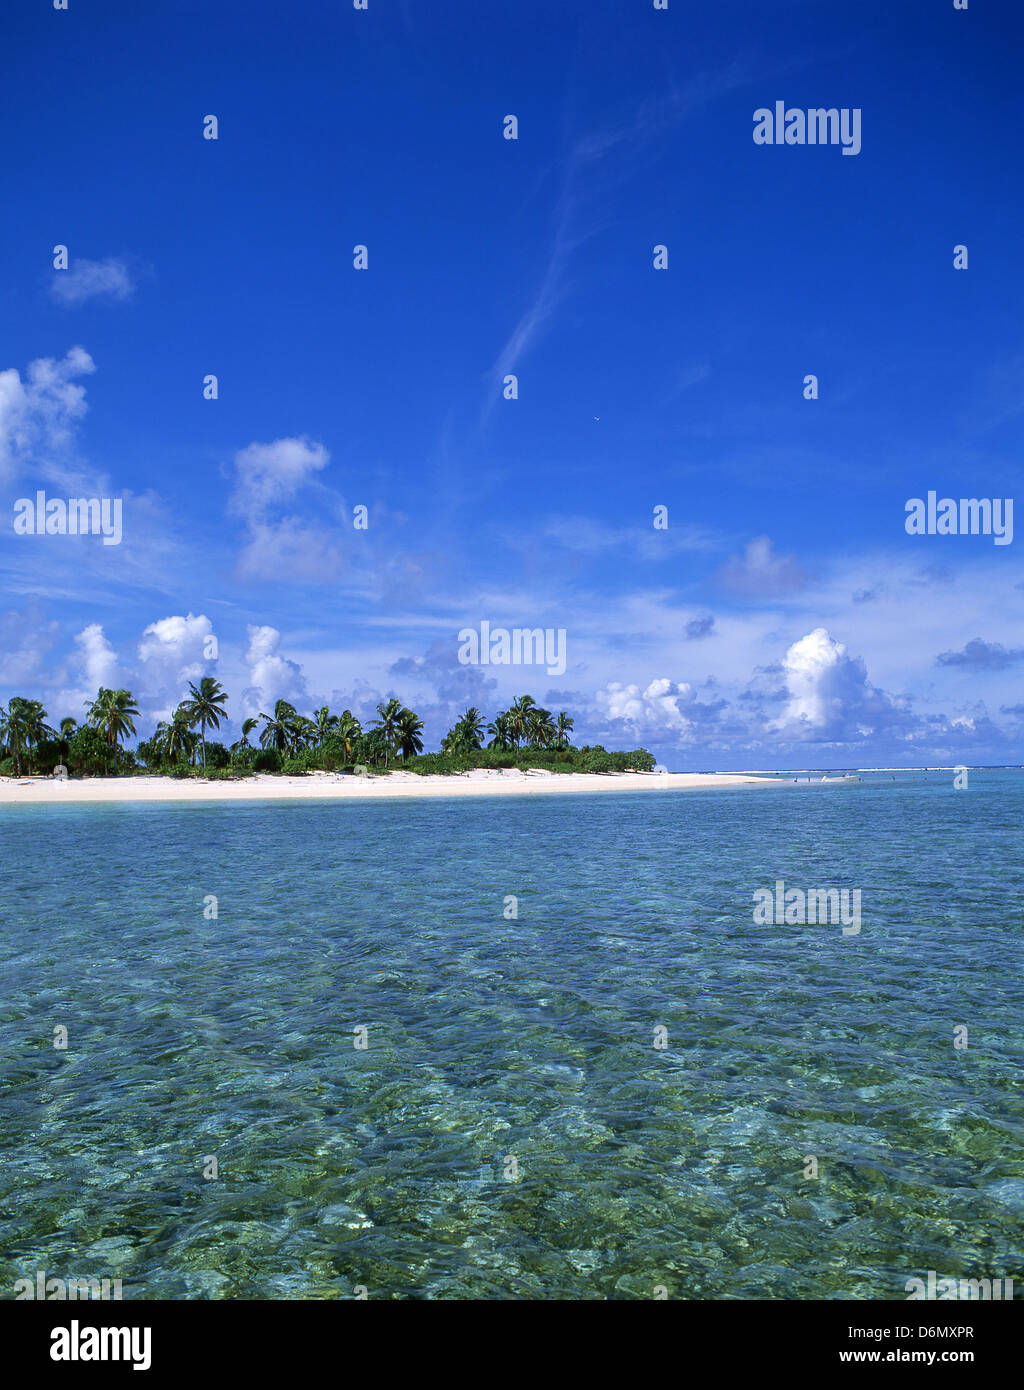 Tropical Island, Aitutaki Atoll, Cook Islands, South Pacific Ocean Stock Photo